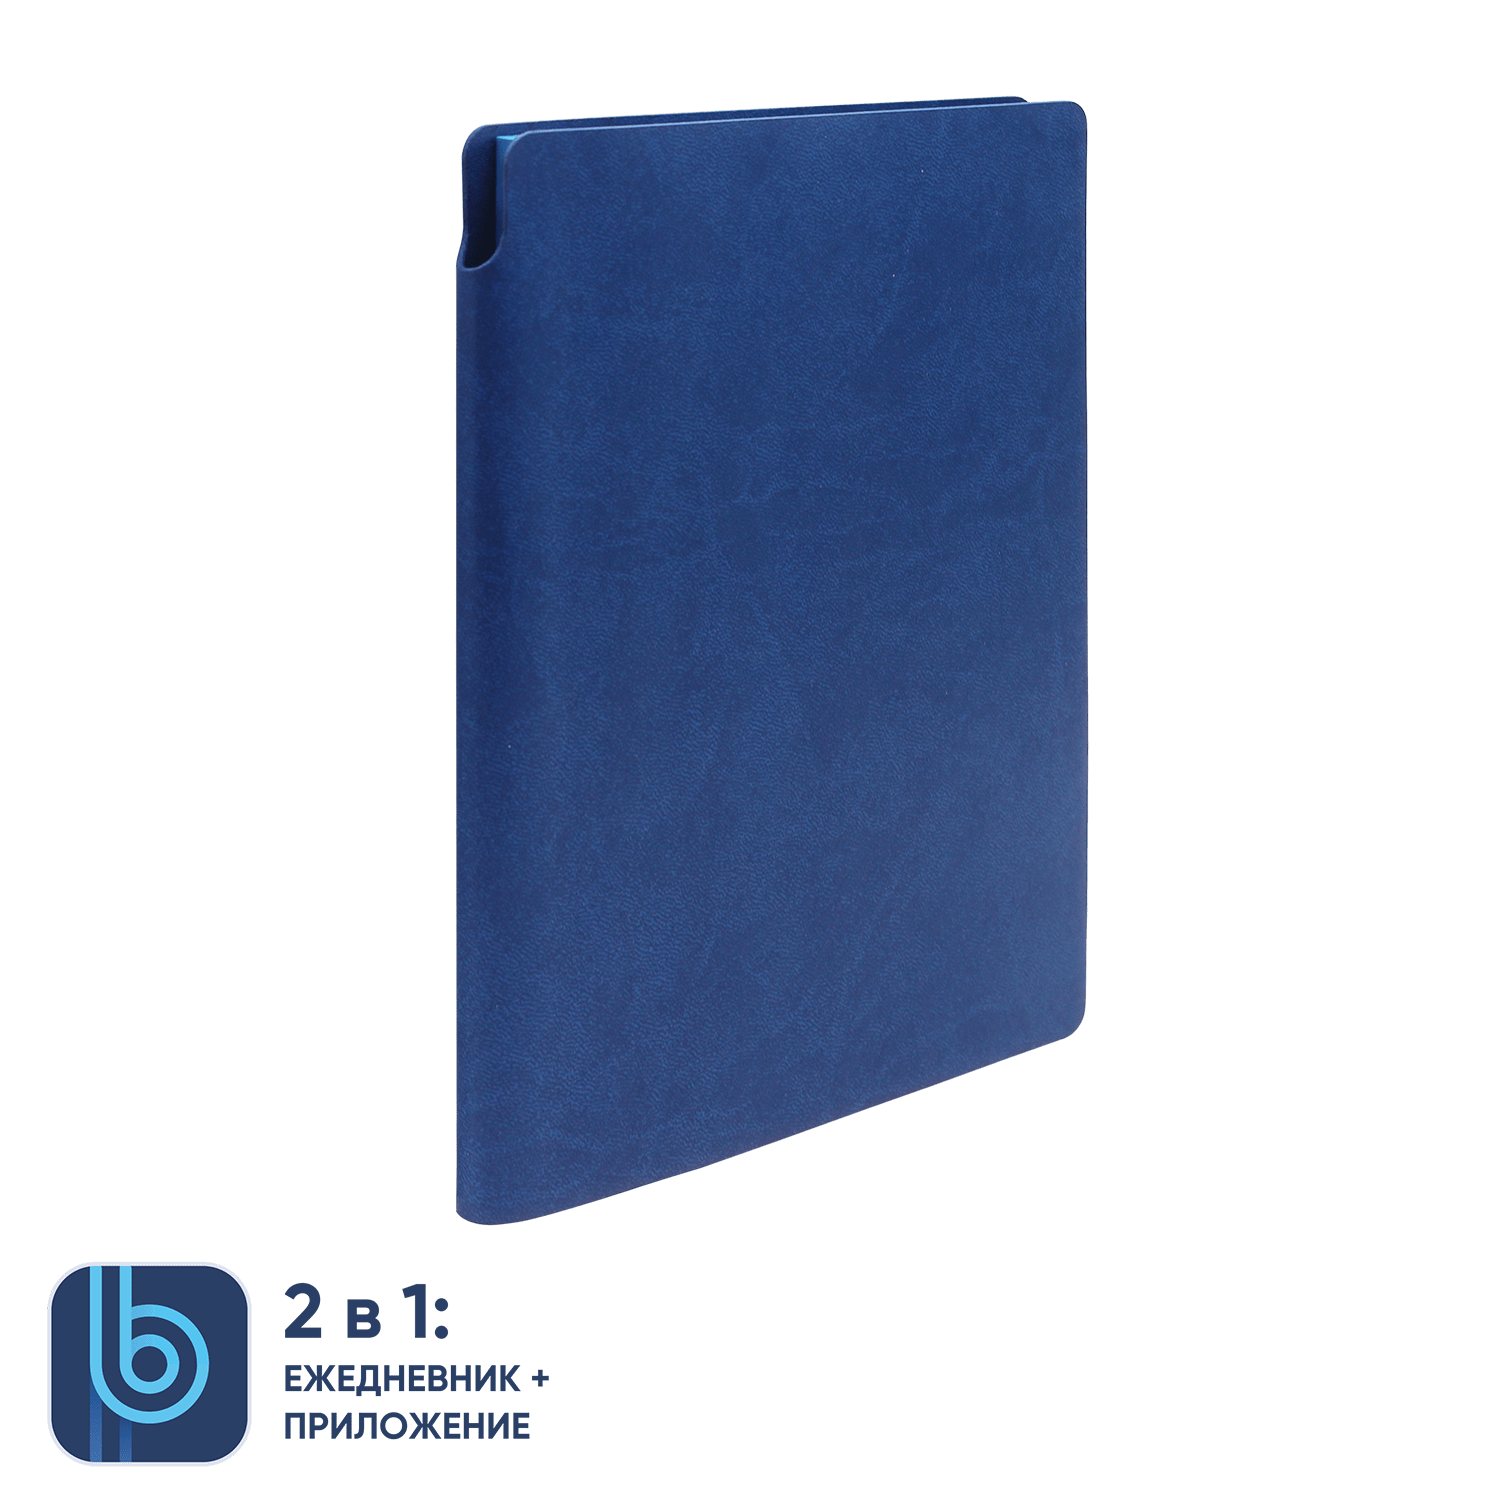 Ежедневник Bplanner.04 blue	 (синий), синий, кожзам